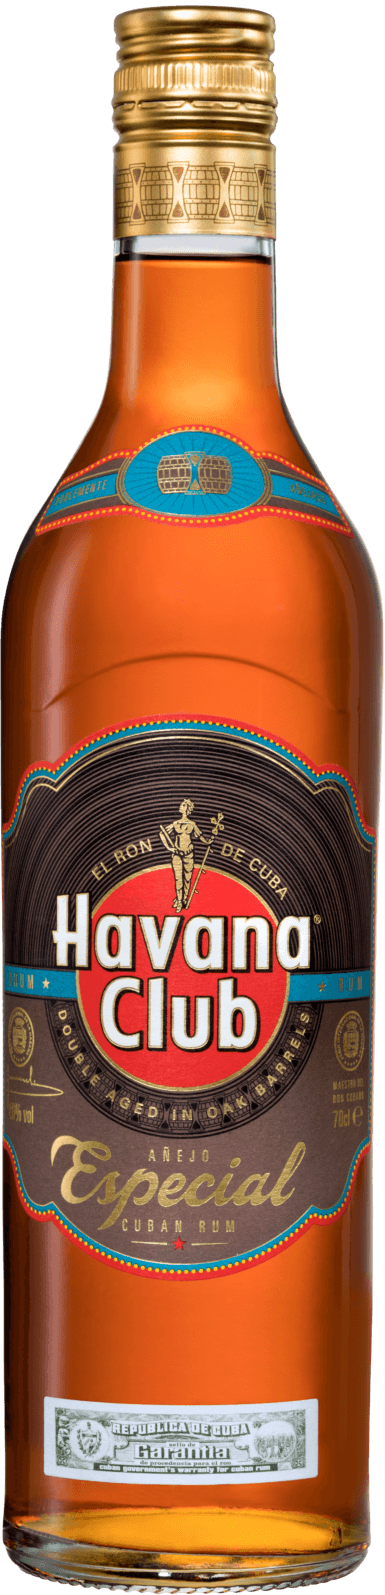 Actualizar 75+ imagen havana club especial rum